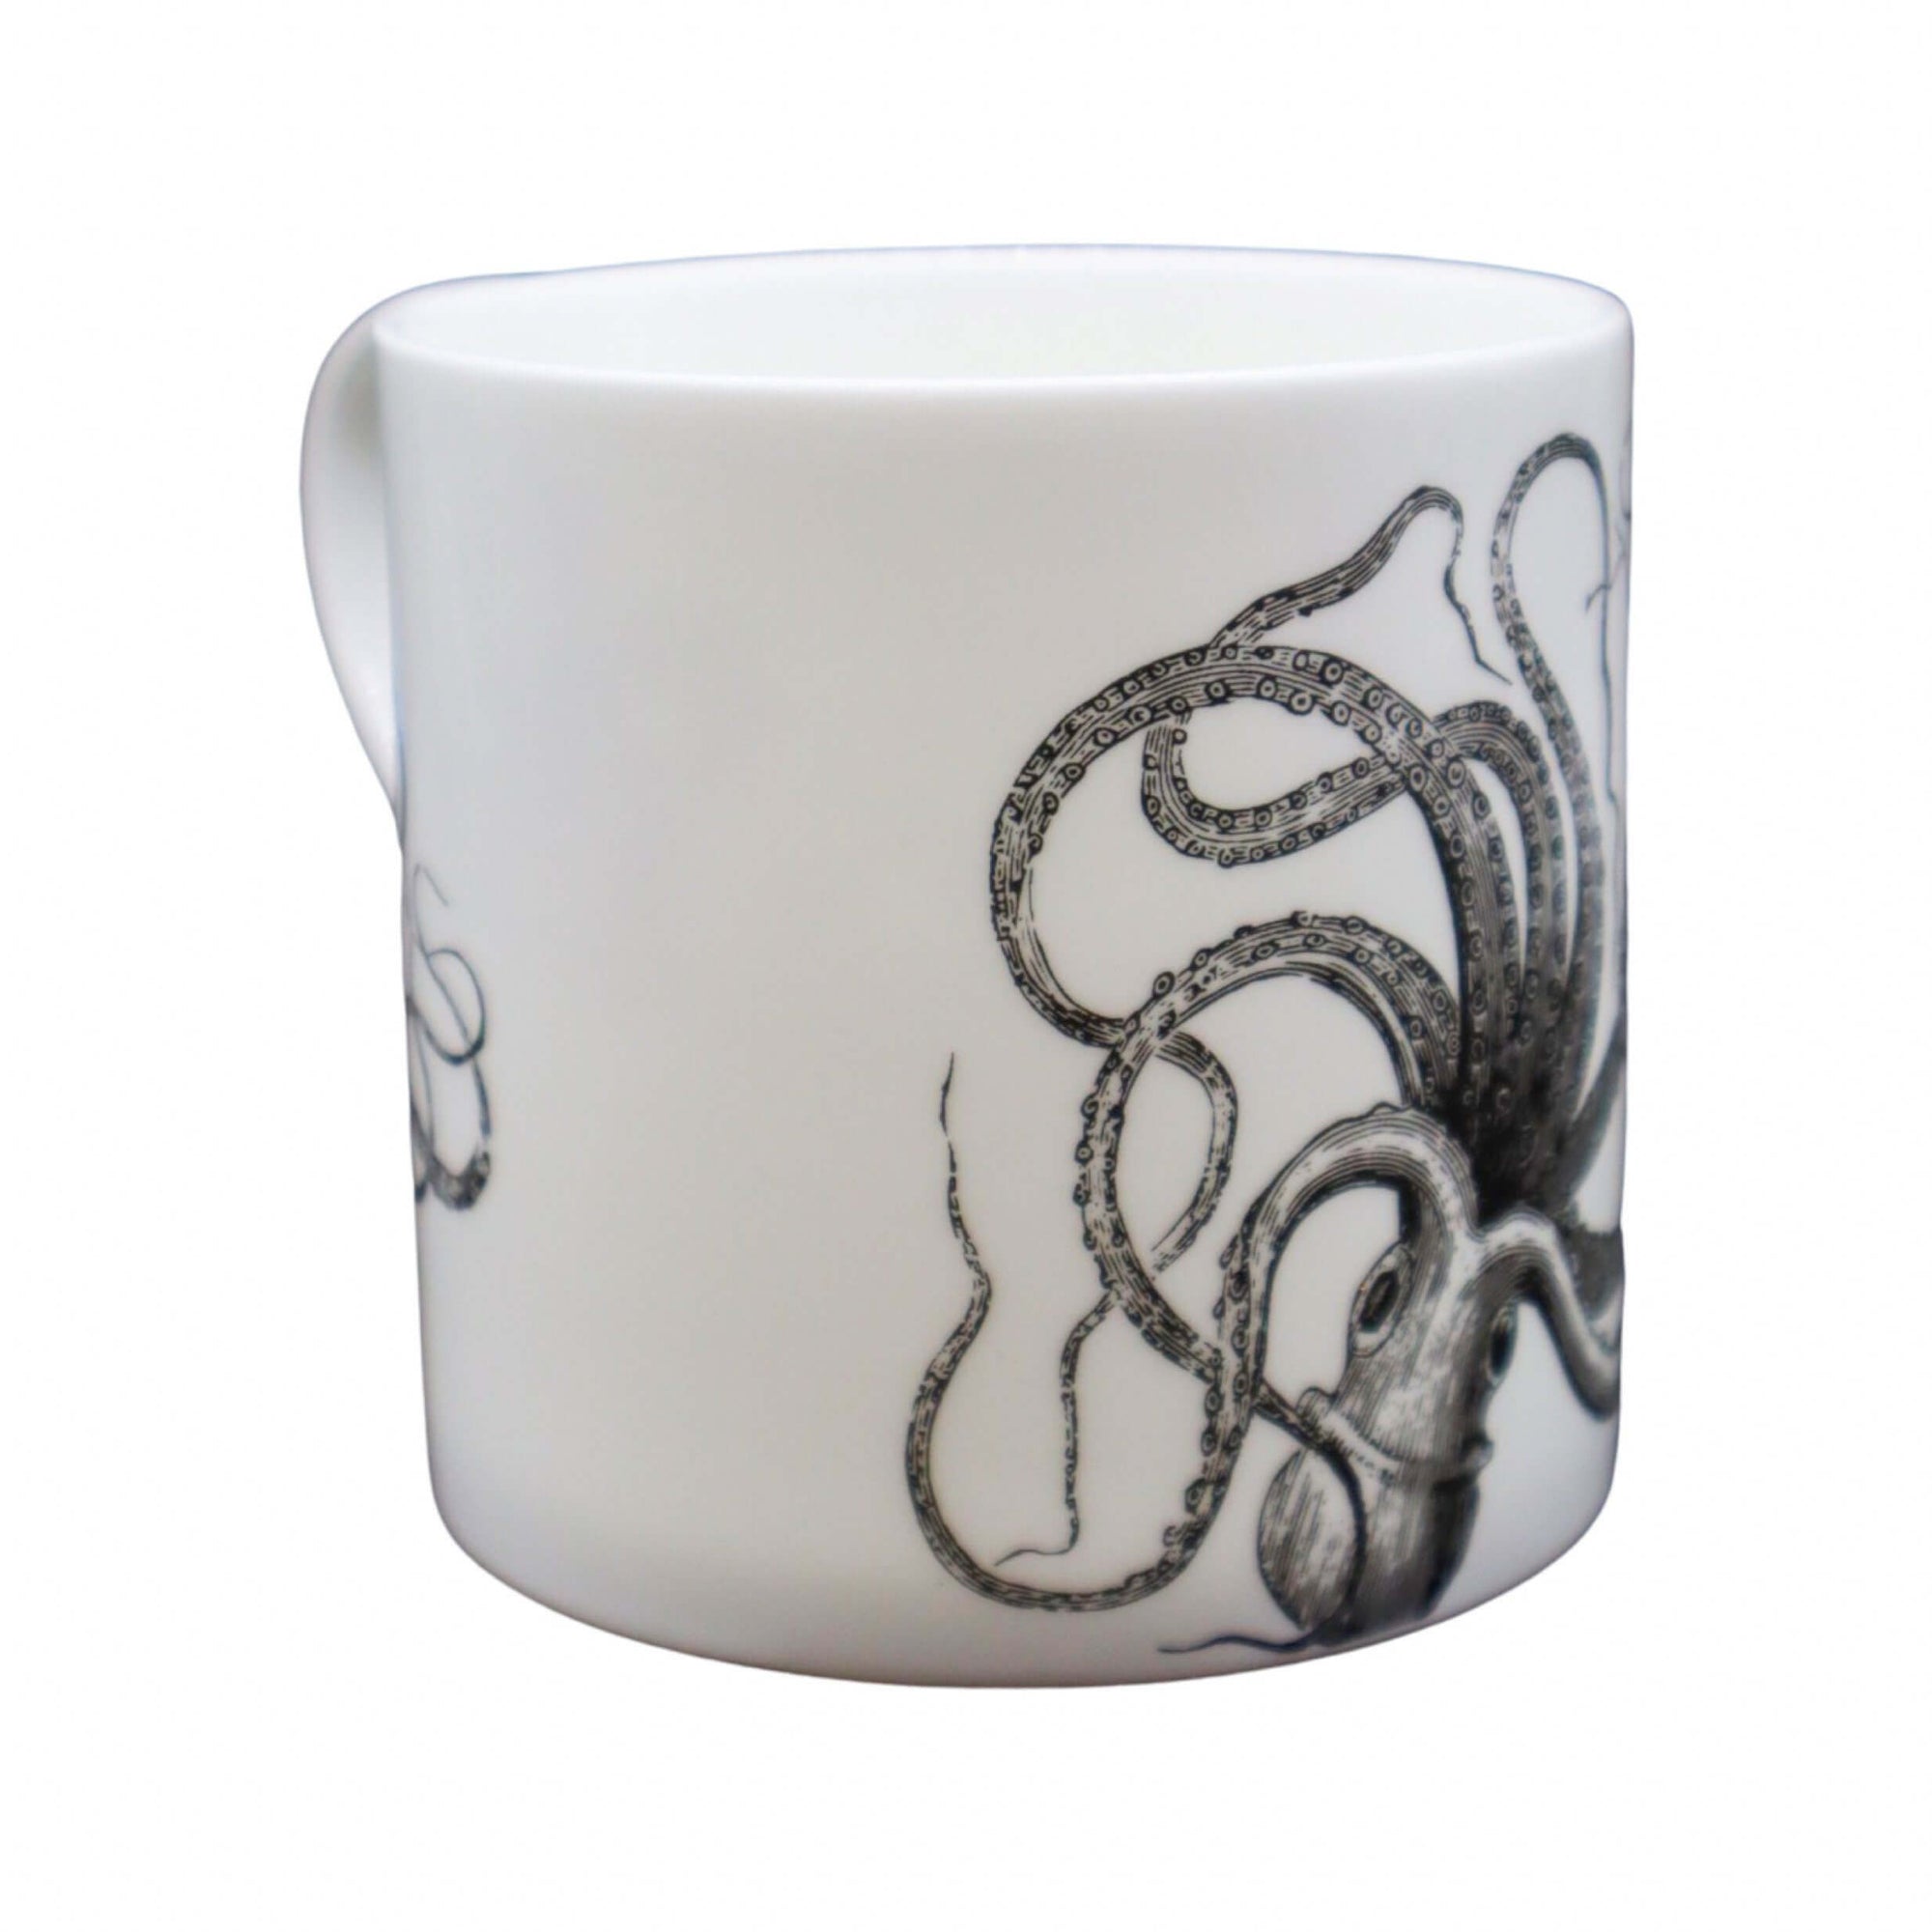 Kraken Can Can 400ml Bone China Mug Mugs Mustard and Gray Ltd Shropshire UK